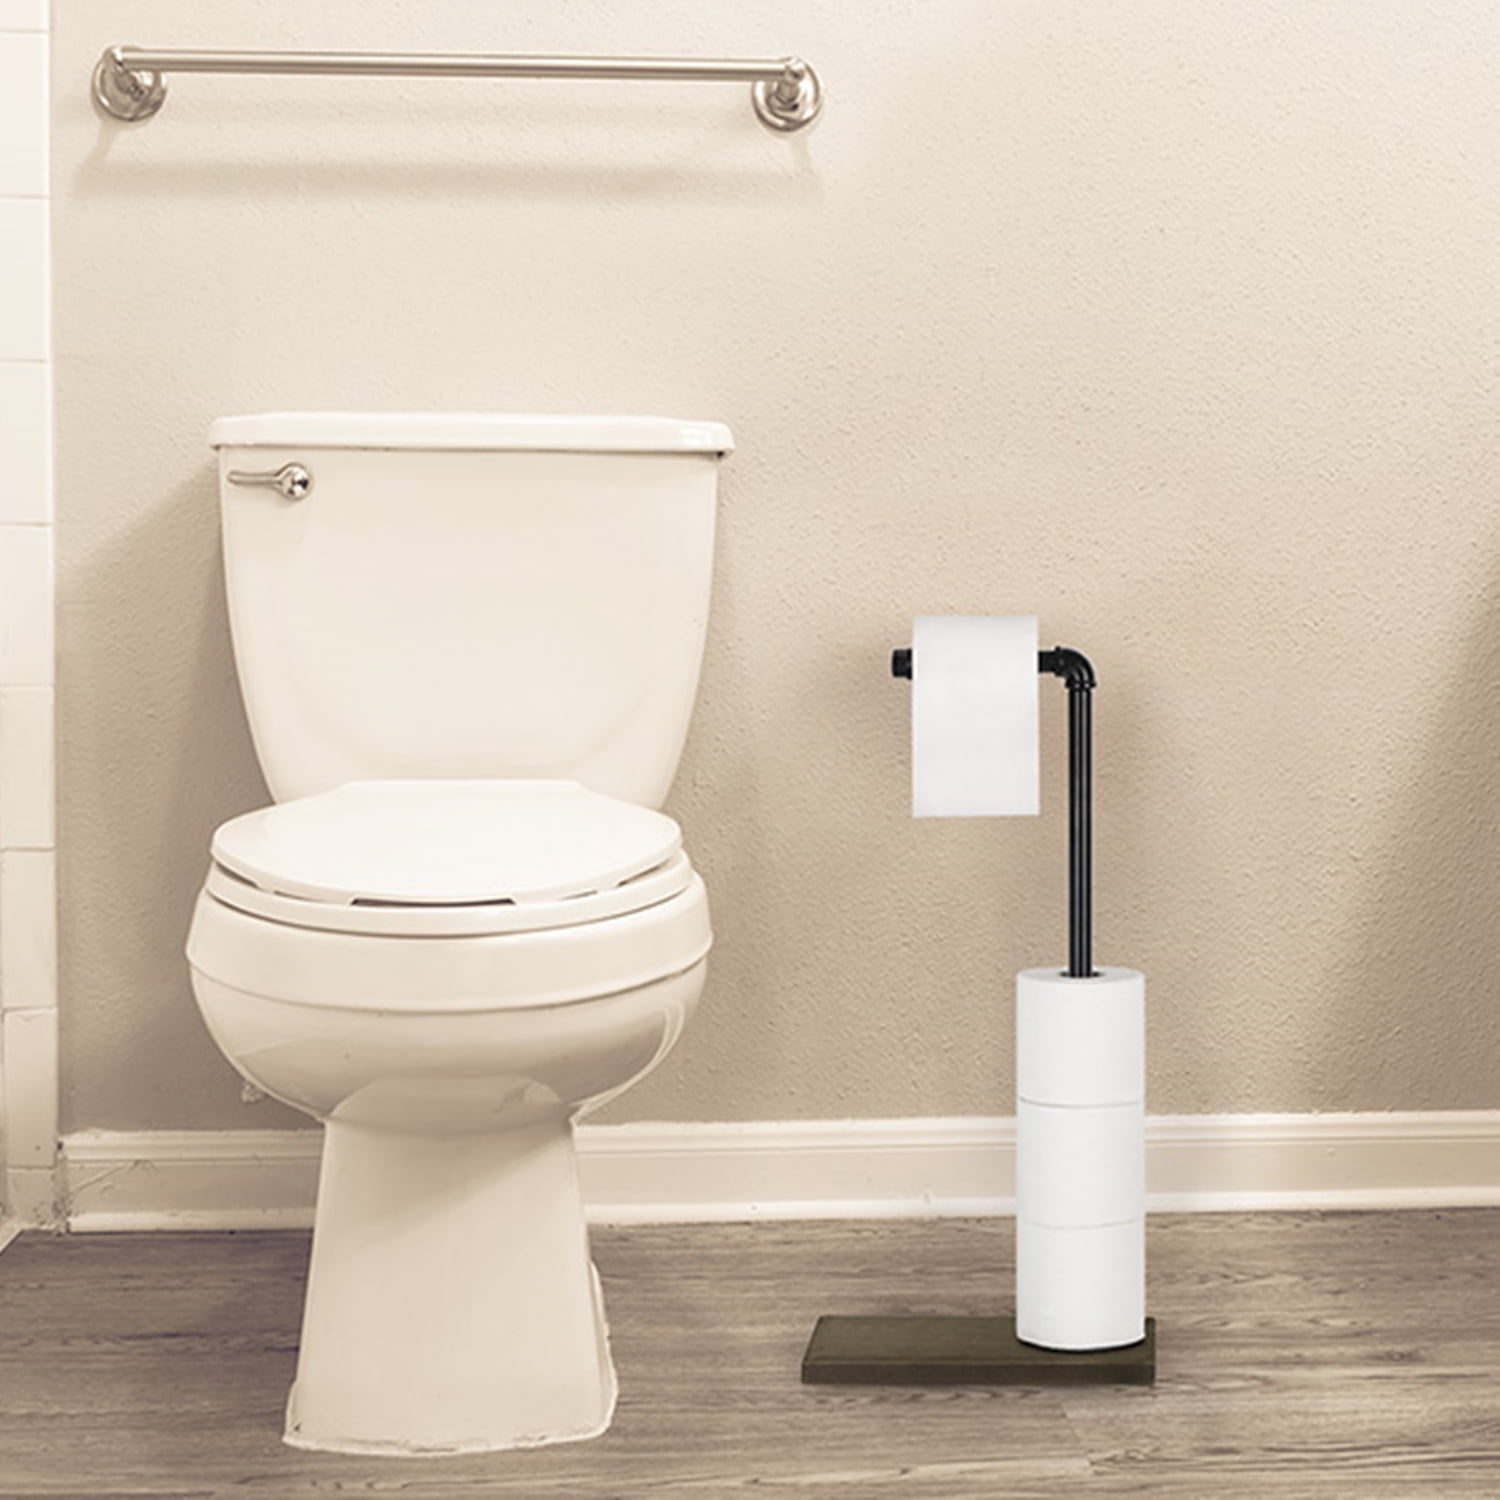 L-HOP PMMA wall lamp / toilet roll holder By Dark